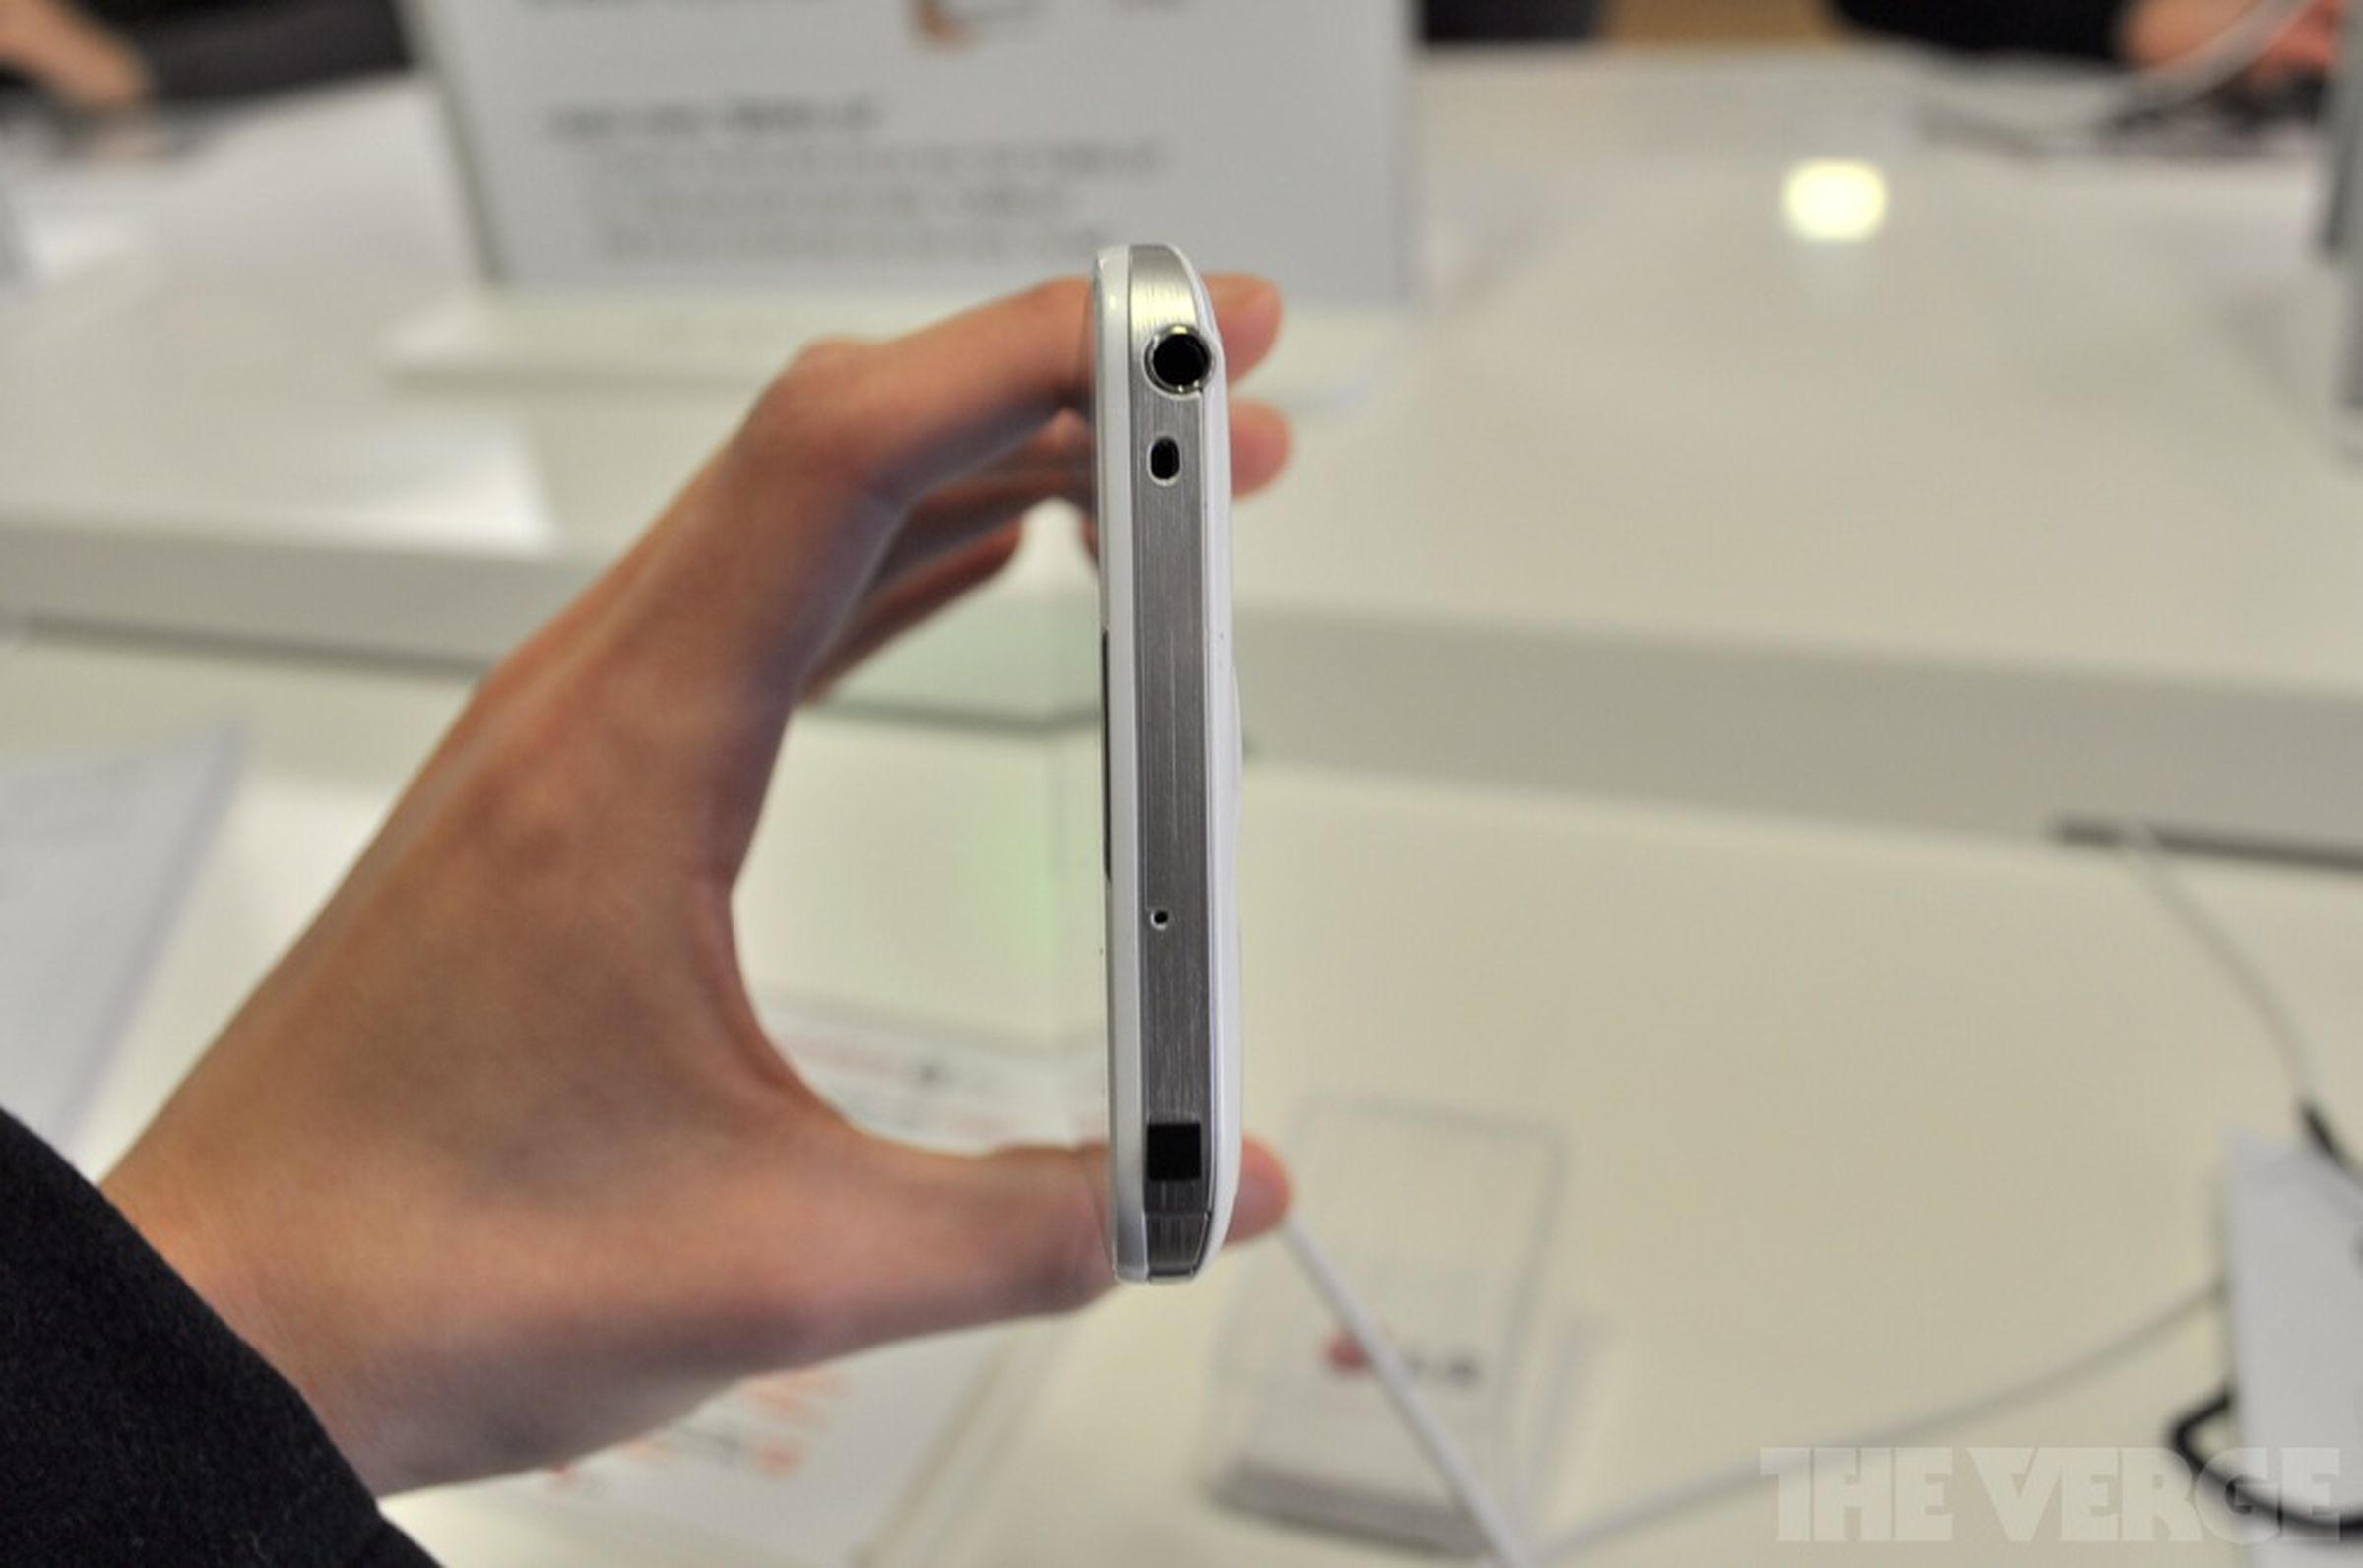 LG Optimus G Pro (5.5-inch) photos